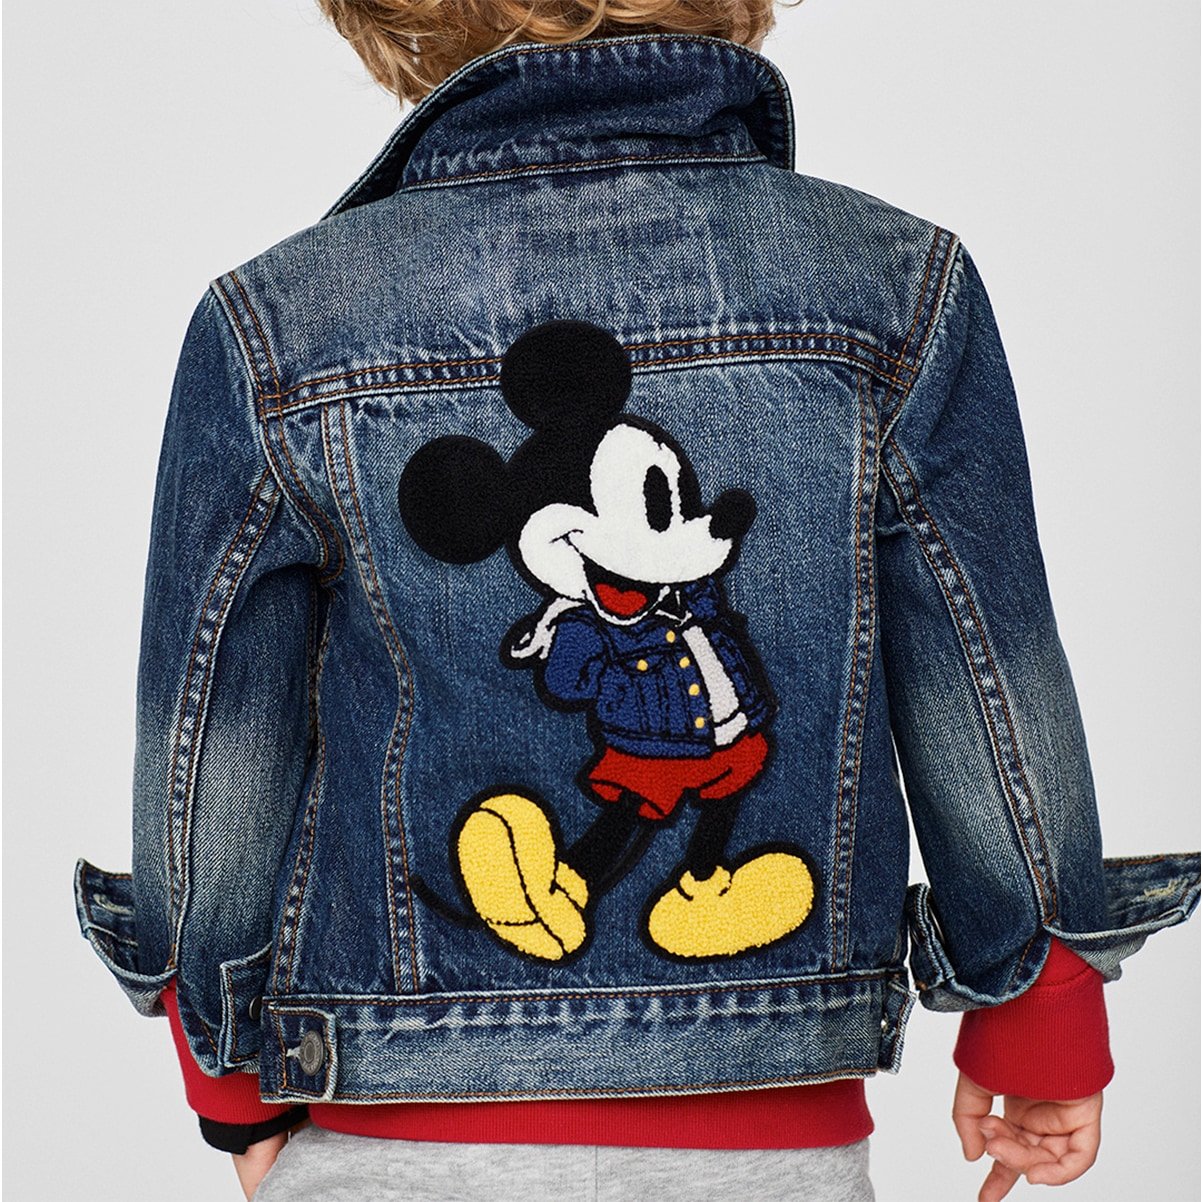 gap mickey mouse jacket